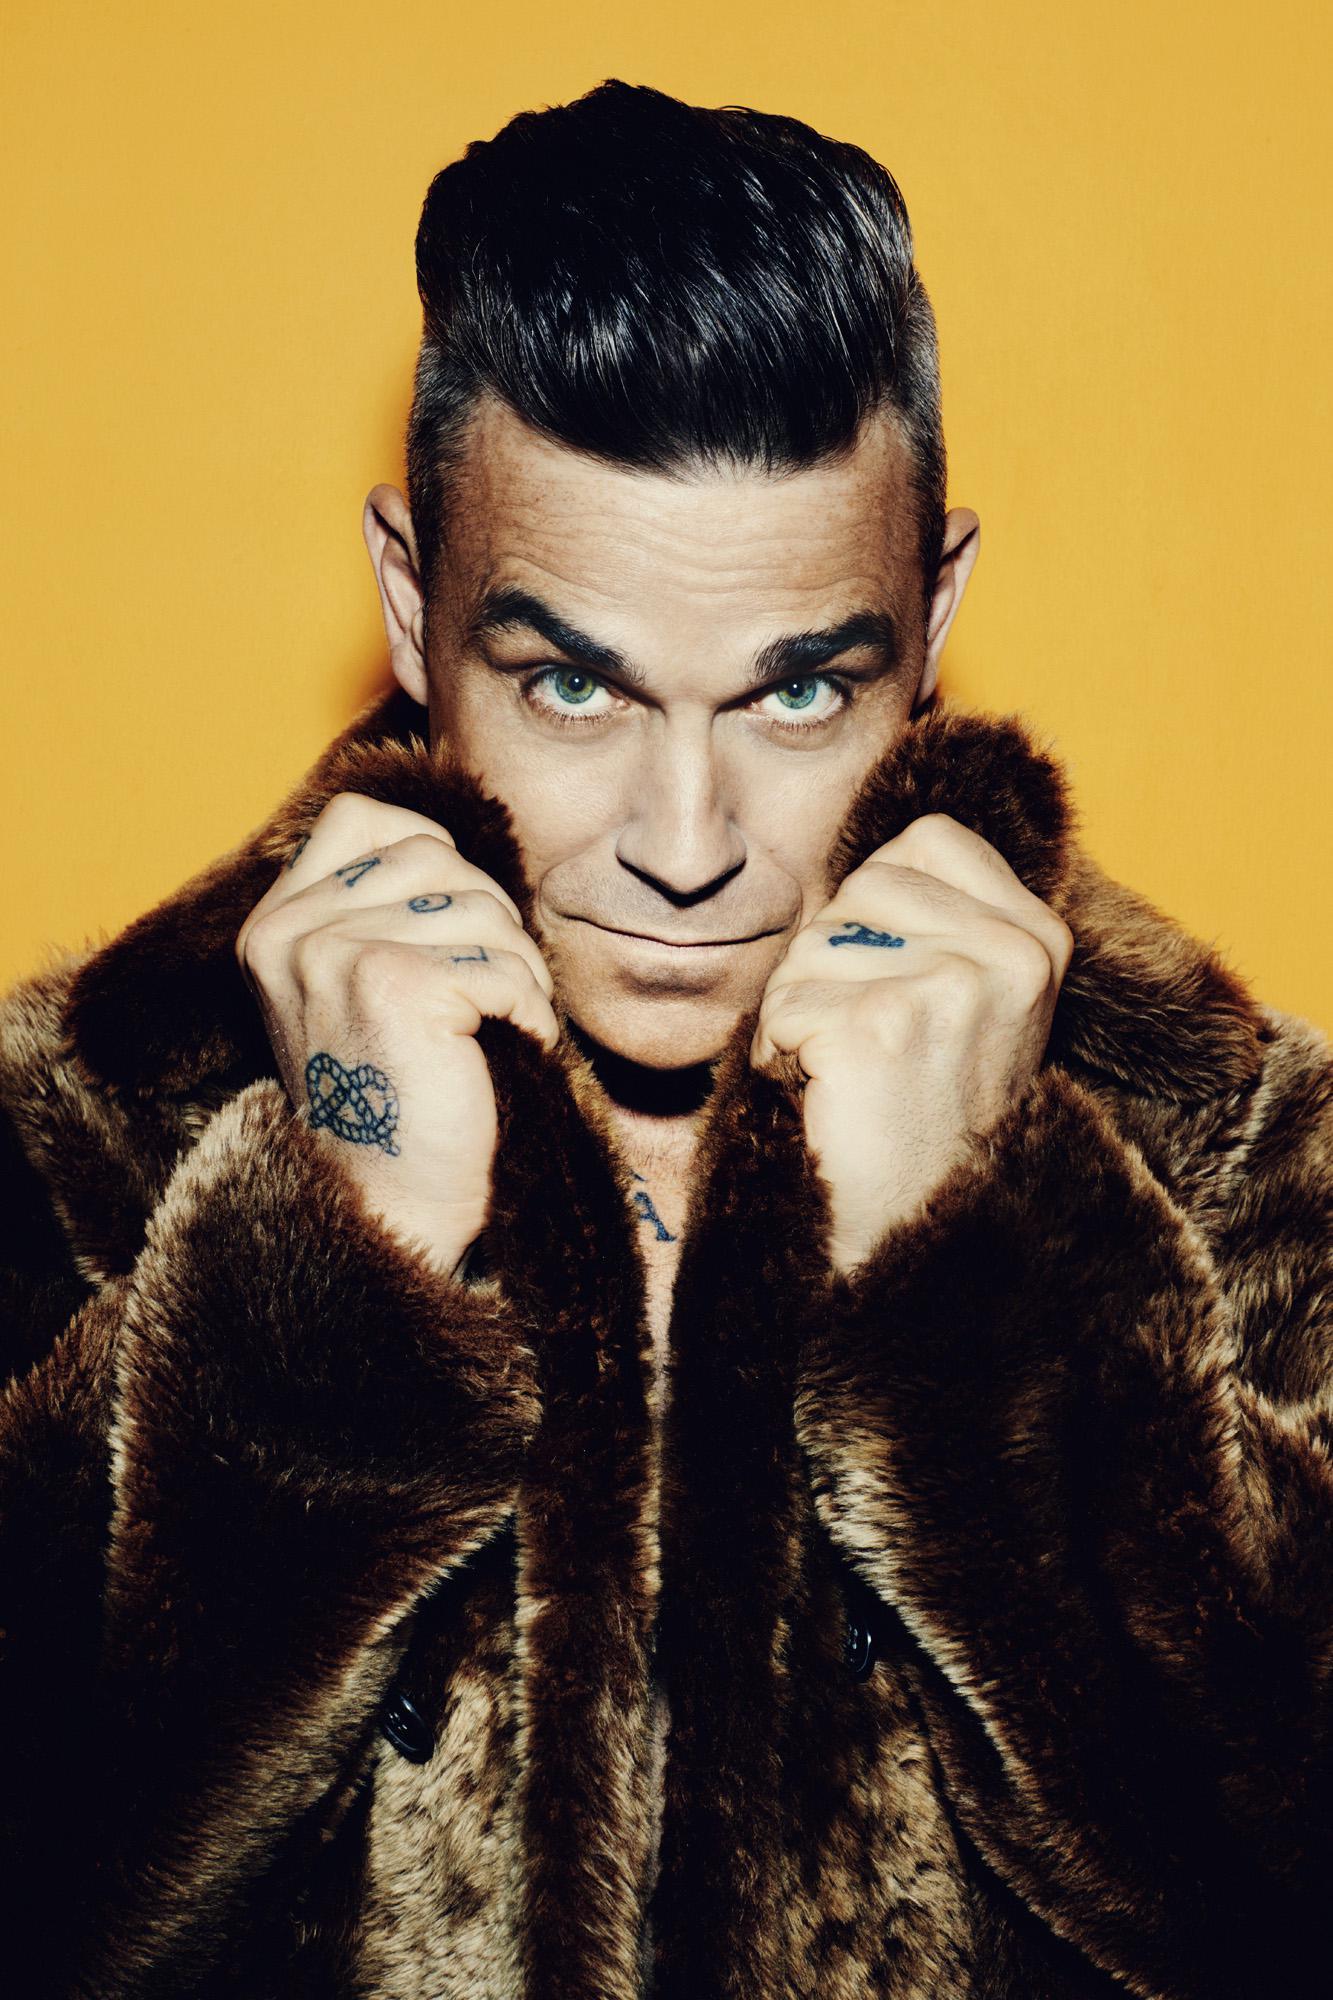 Robbie Williams Wallpaper High Quality